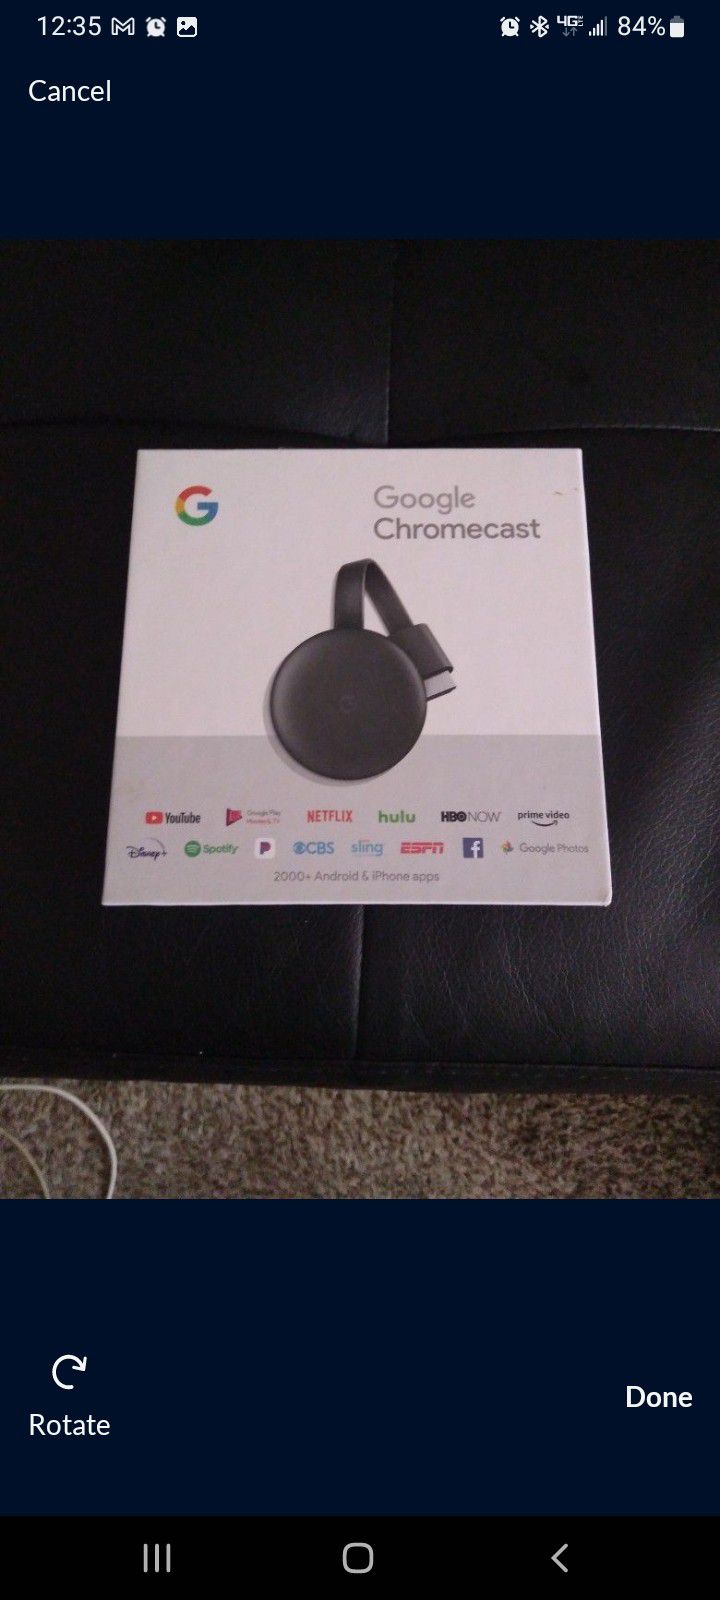 Google Chromecast 3rd Gen, Pet Tracker, and more..